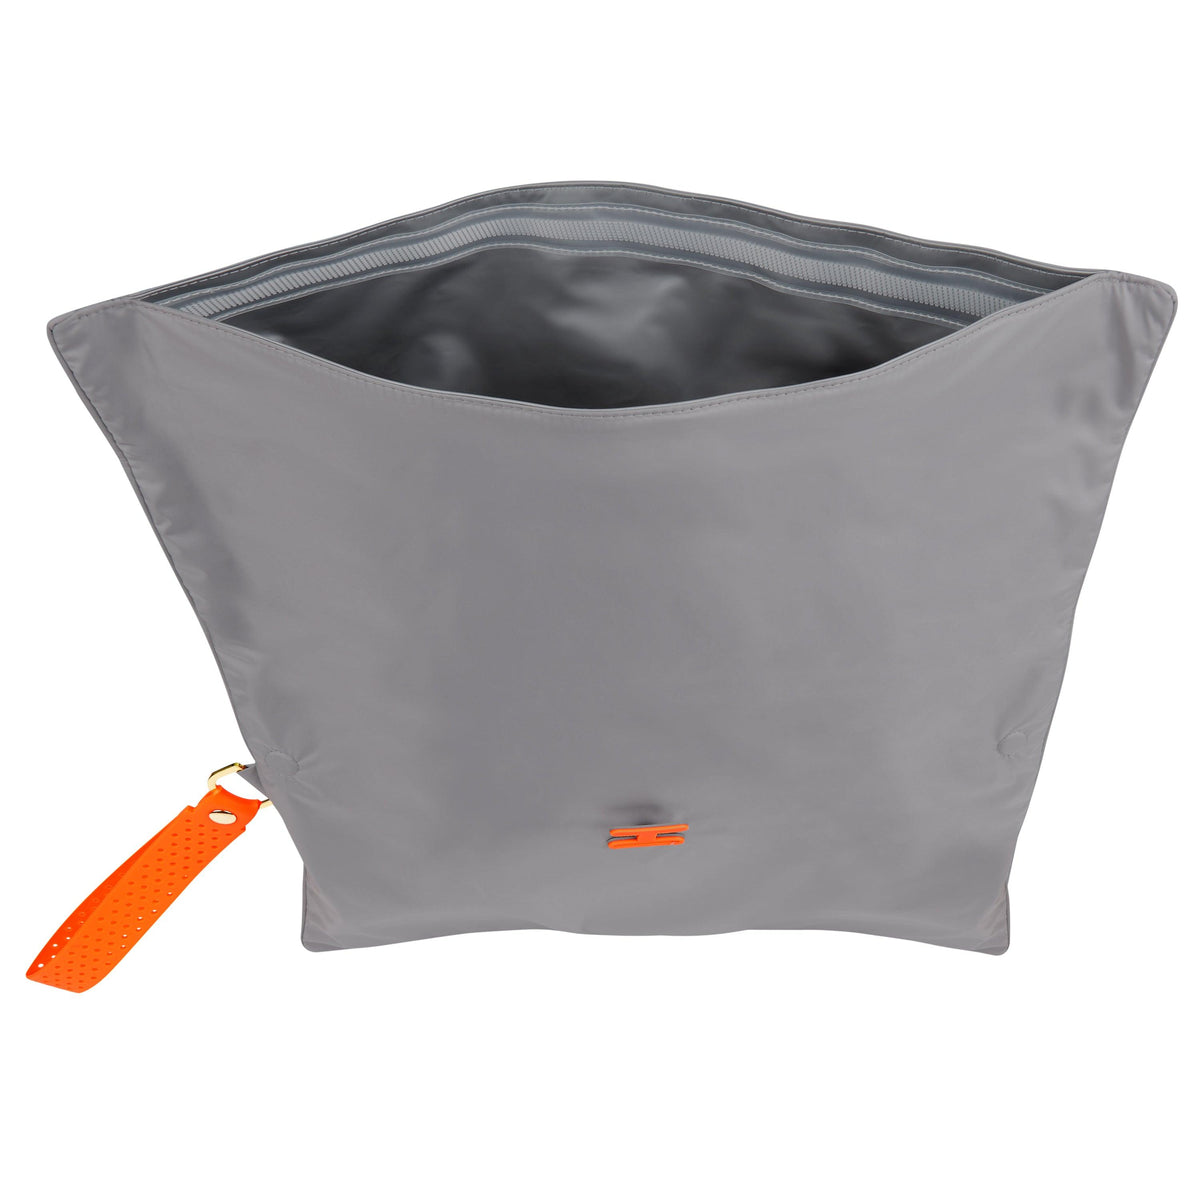 Maxi Wet Bag in Shadow Neon Orange open, and showing waterproof lining 